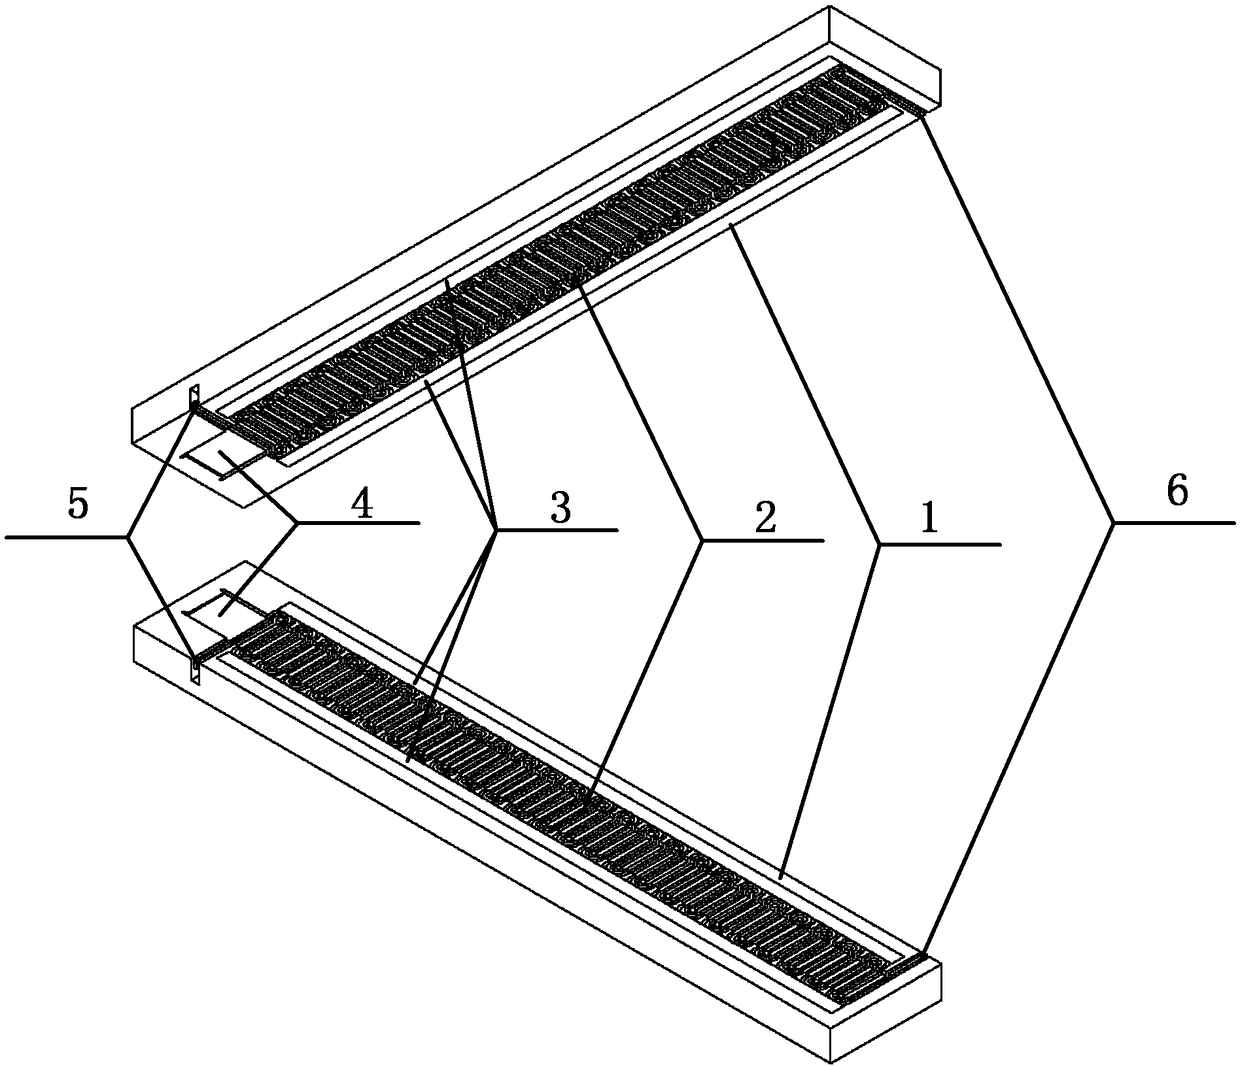 Quasi-coaxial zigzag sheet beam slow-wave structure